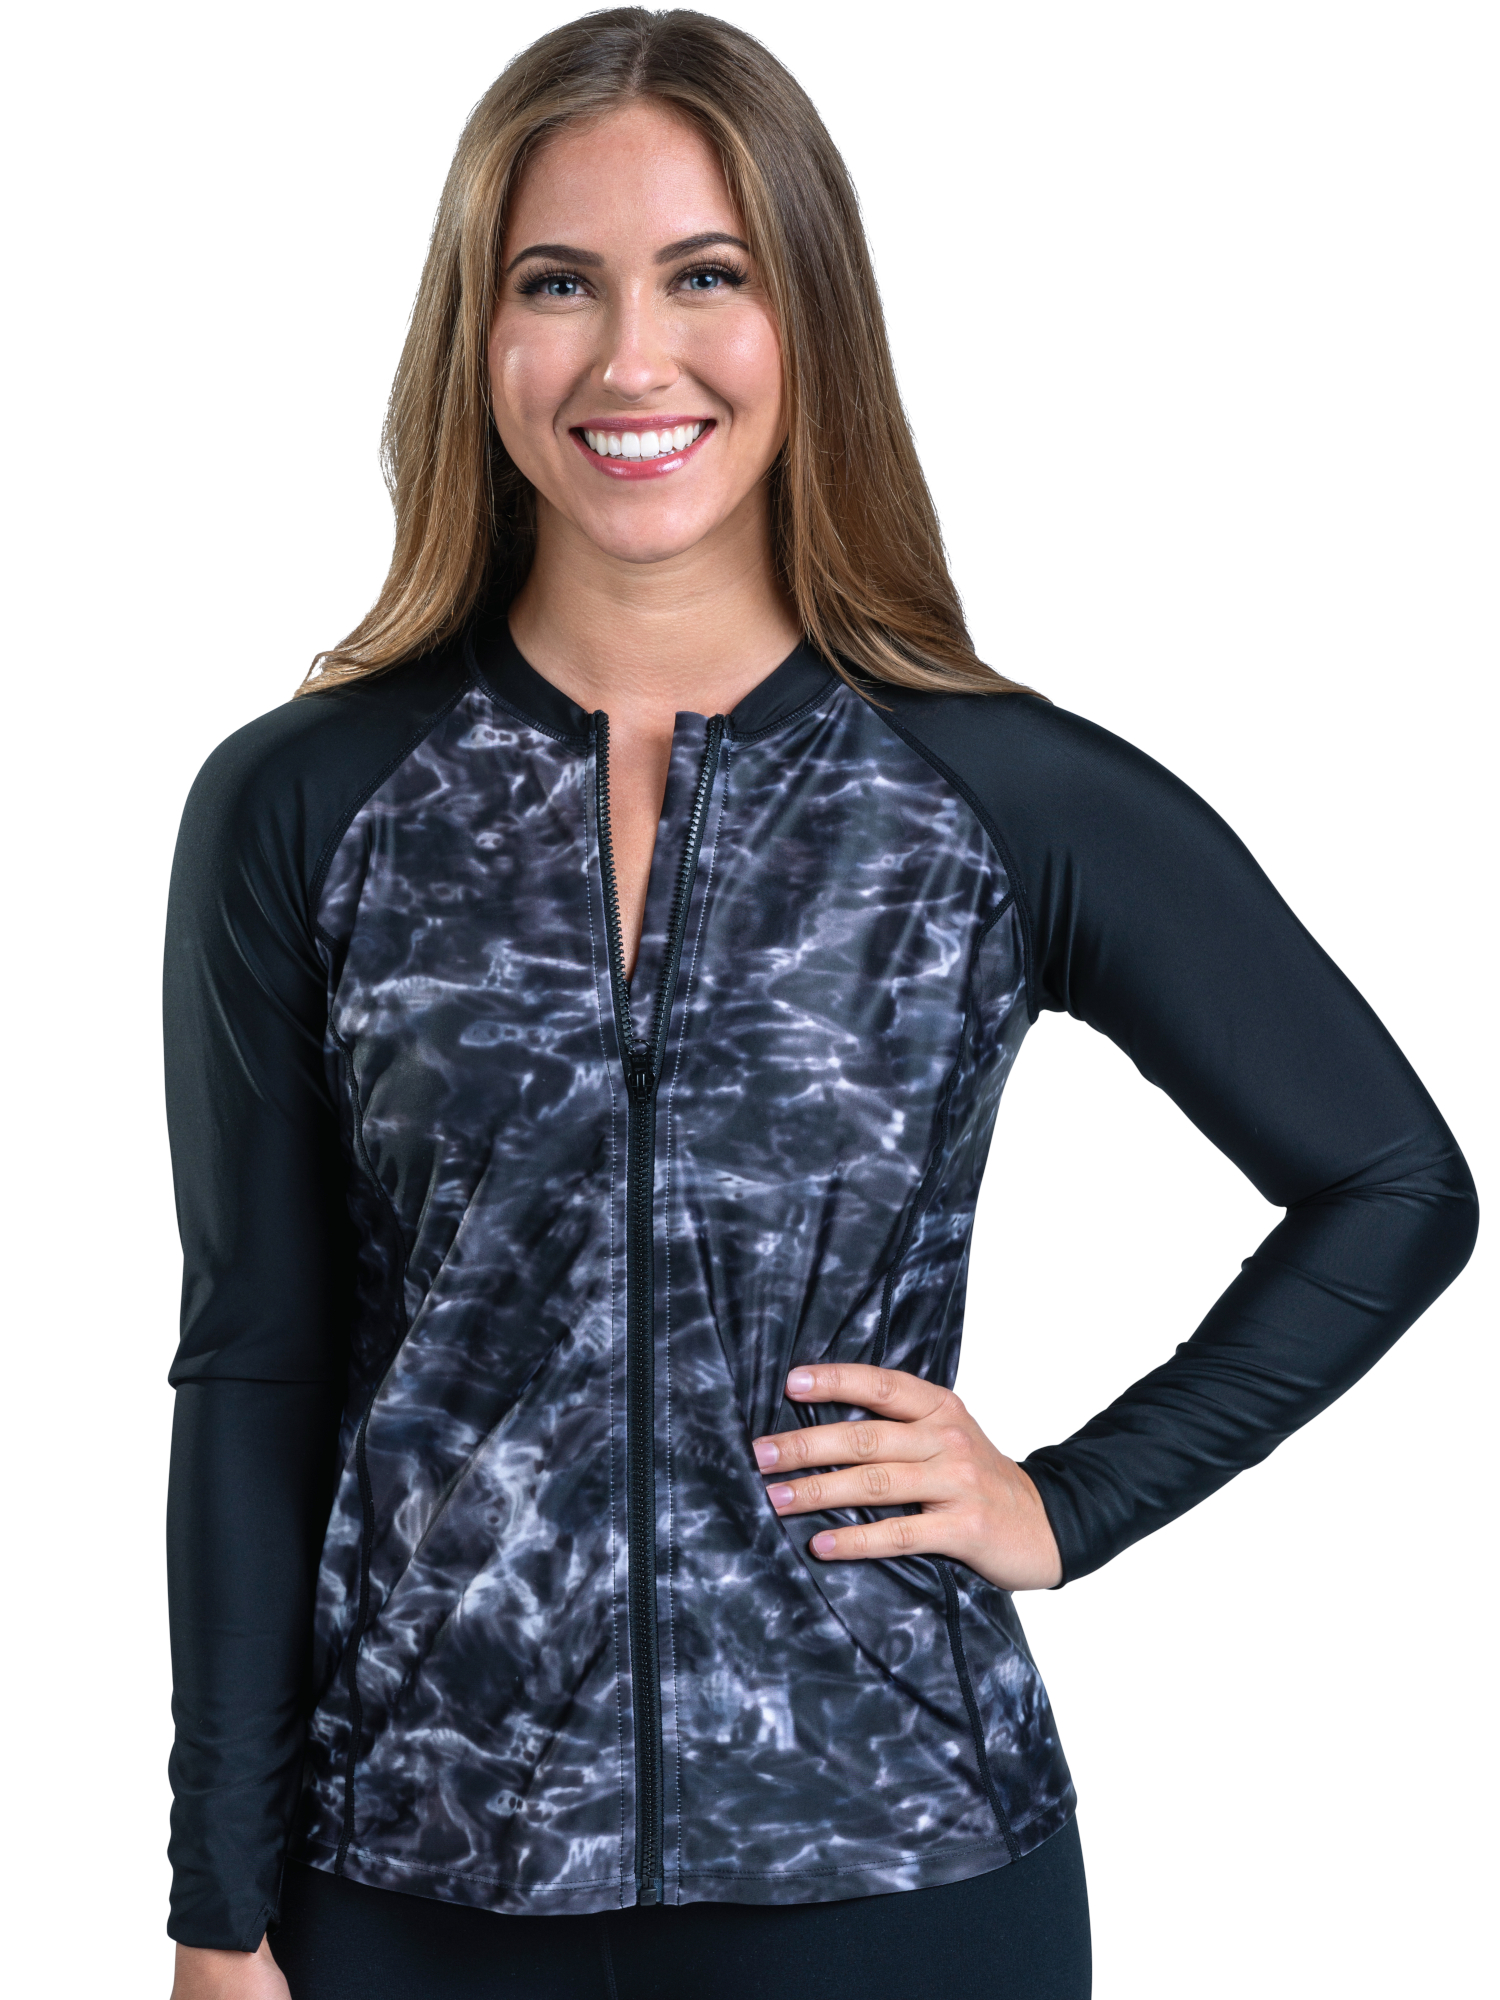 Aqua Design Womens Full Zip Long Sleeve Rash Guard: Front Zipper Swim Shirt: Black Water/Black Size 5X-Large - image 1 of 7